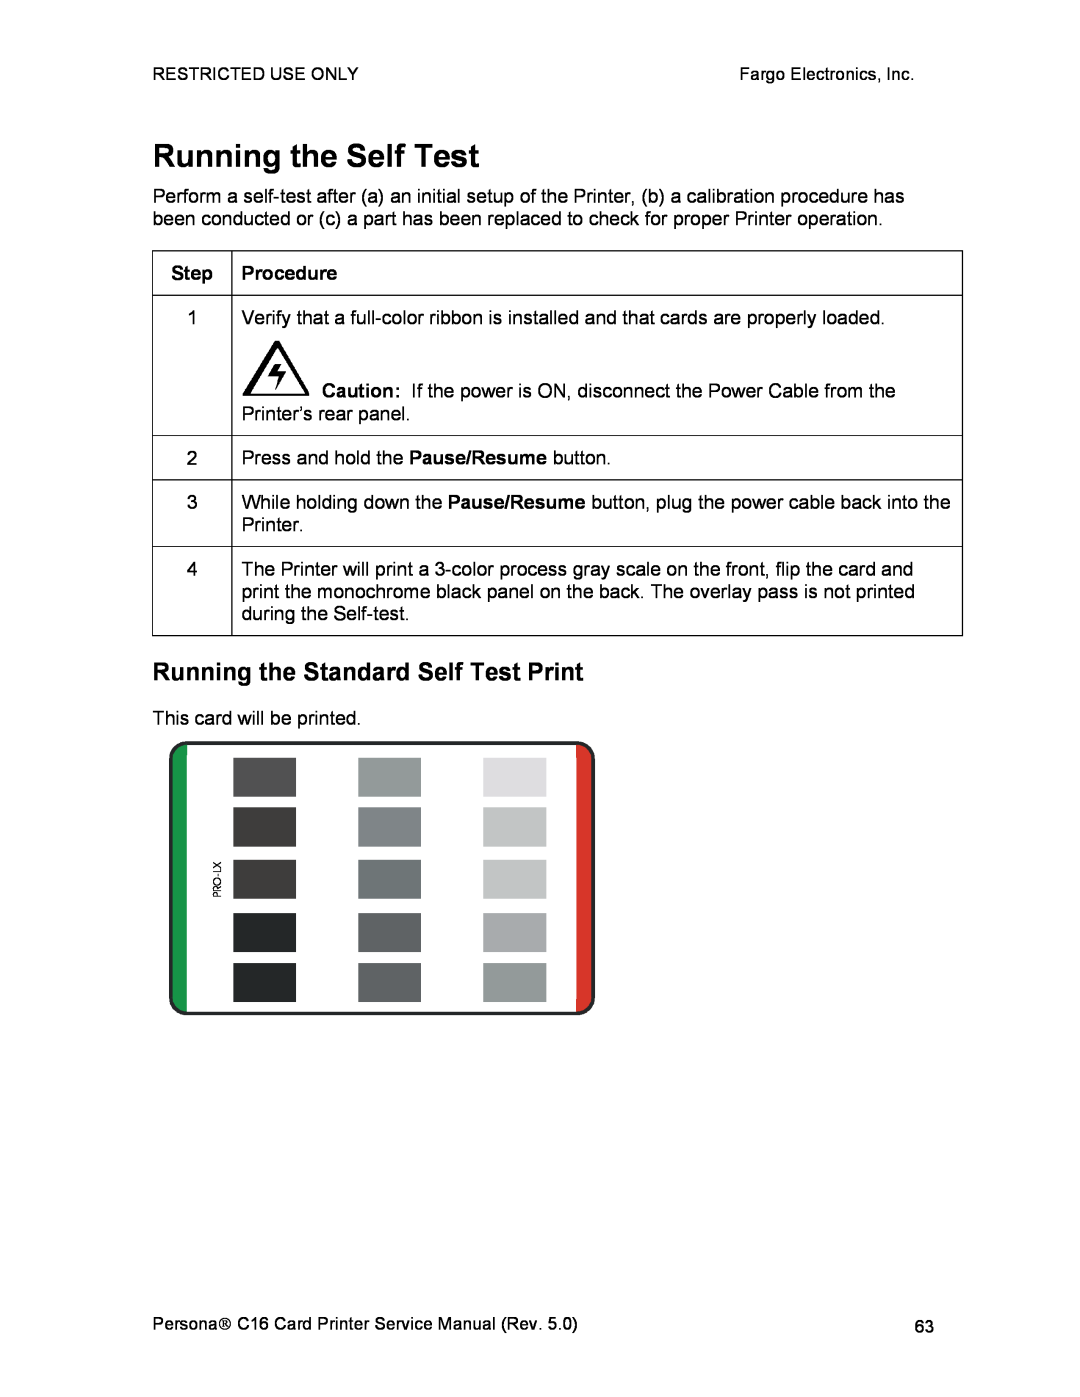 FARGO electronic C16 service manual Running the Self Test, Running the Standard Self Test Print 